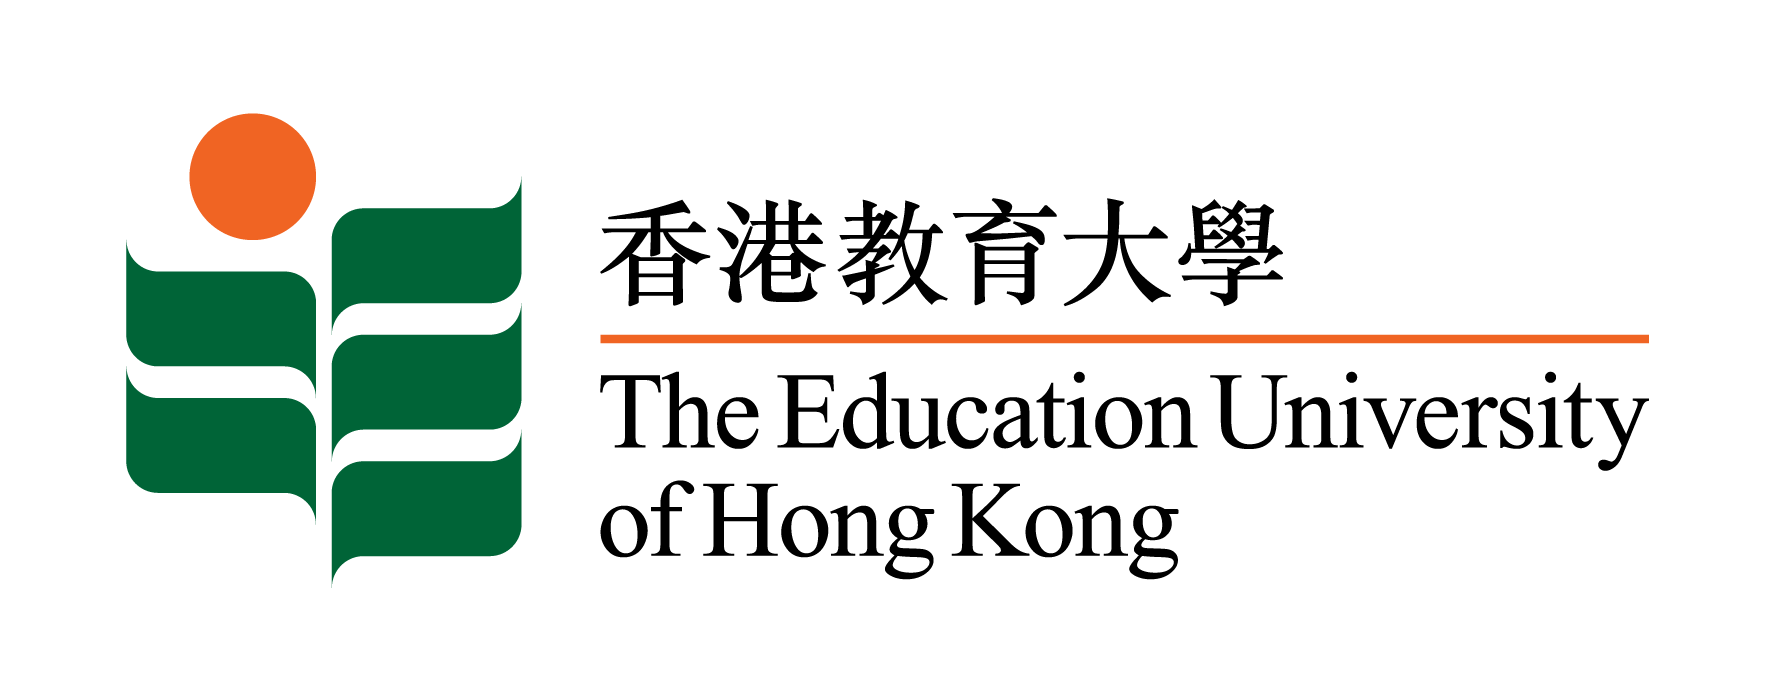 College of Education U of L Logo - The Education University of Hong Kong (EdUHK) -